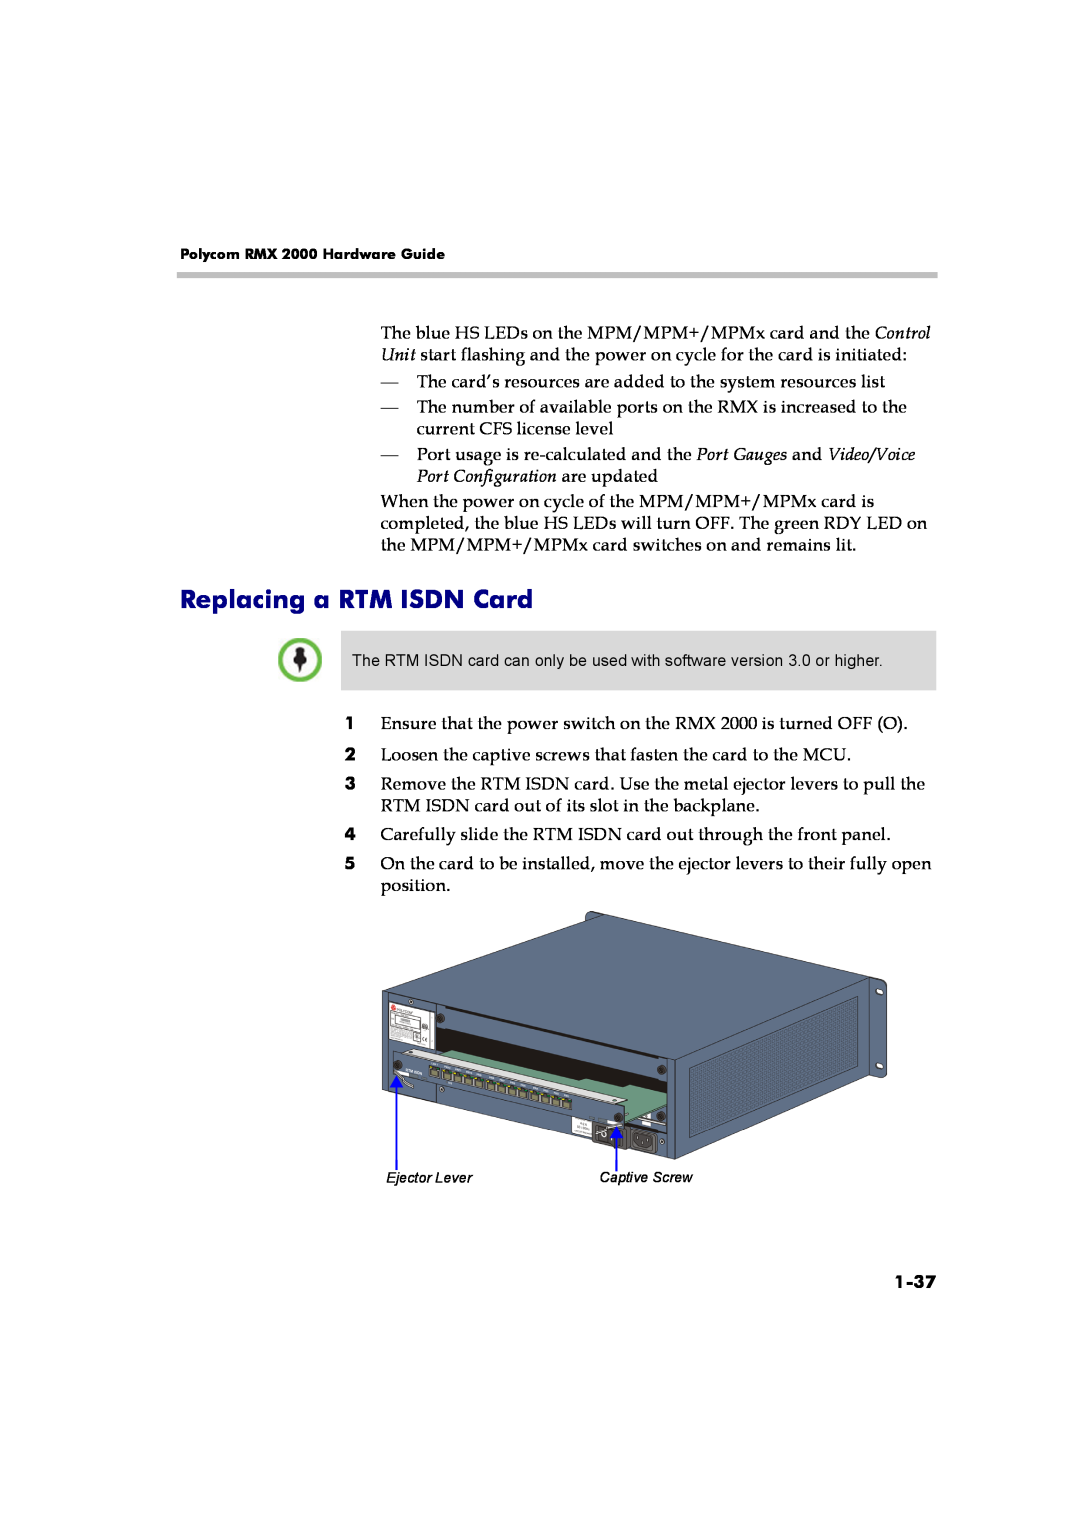 Polycom DOC2558B manual Replacing a RTM ISDN Card, 1-37 